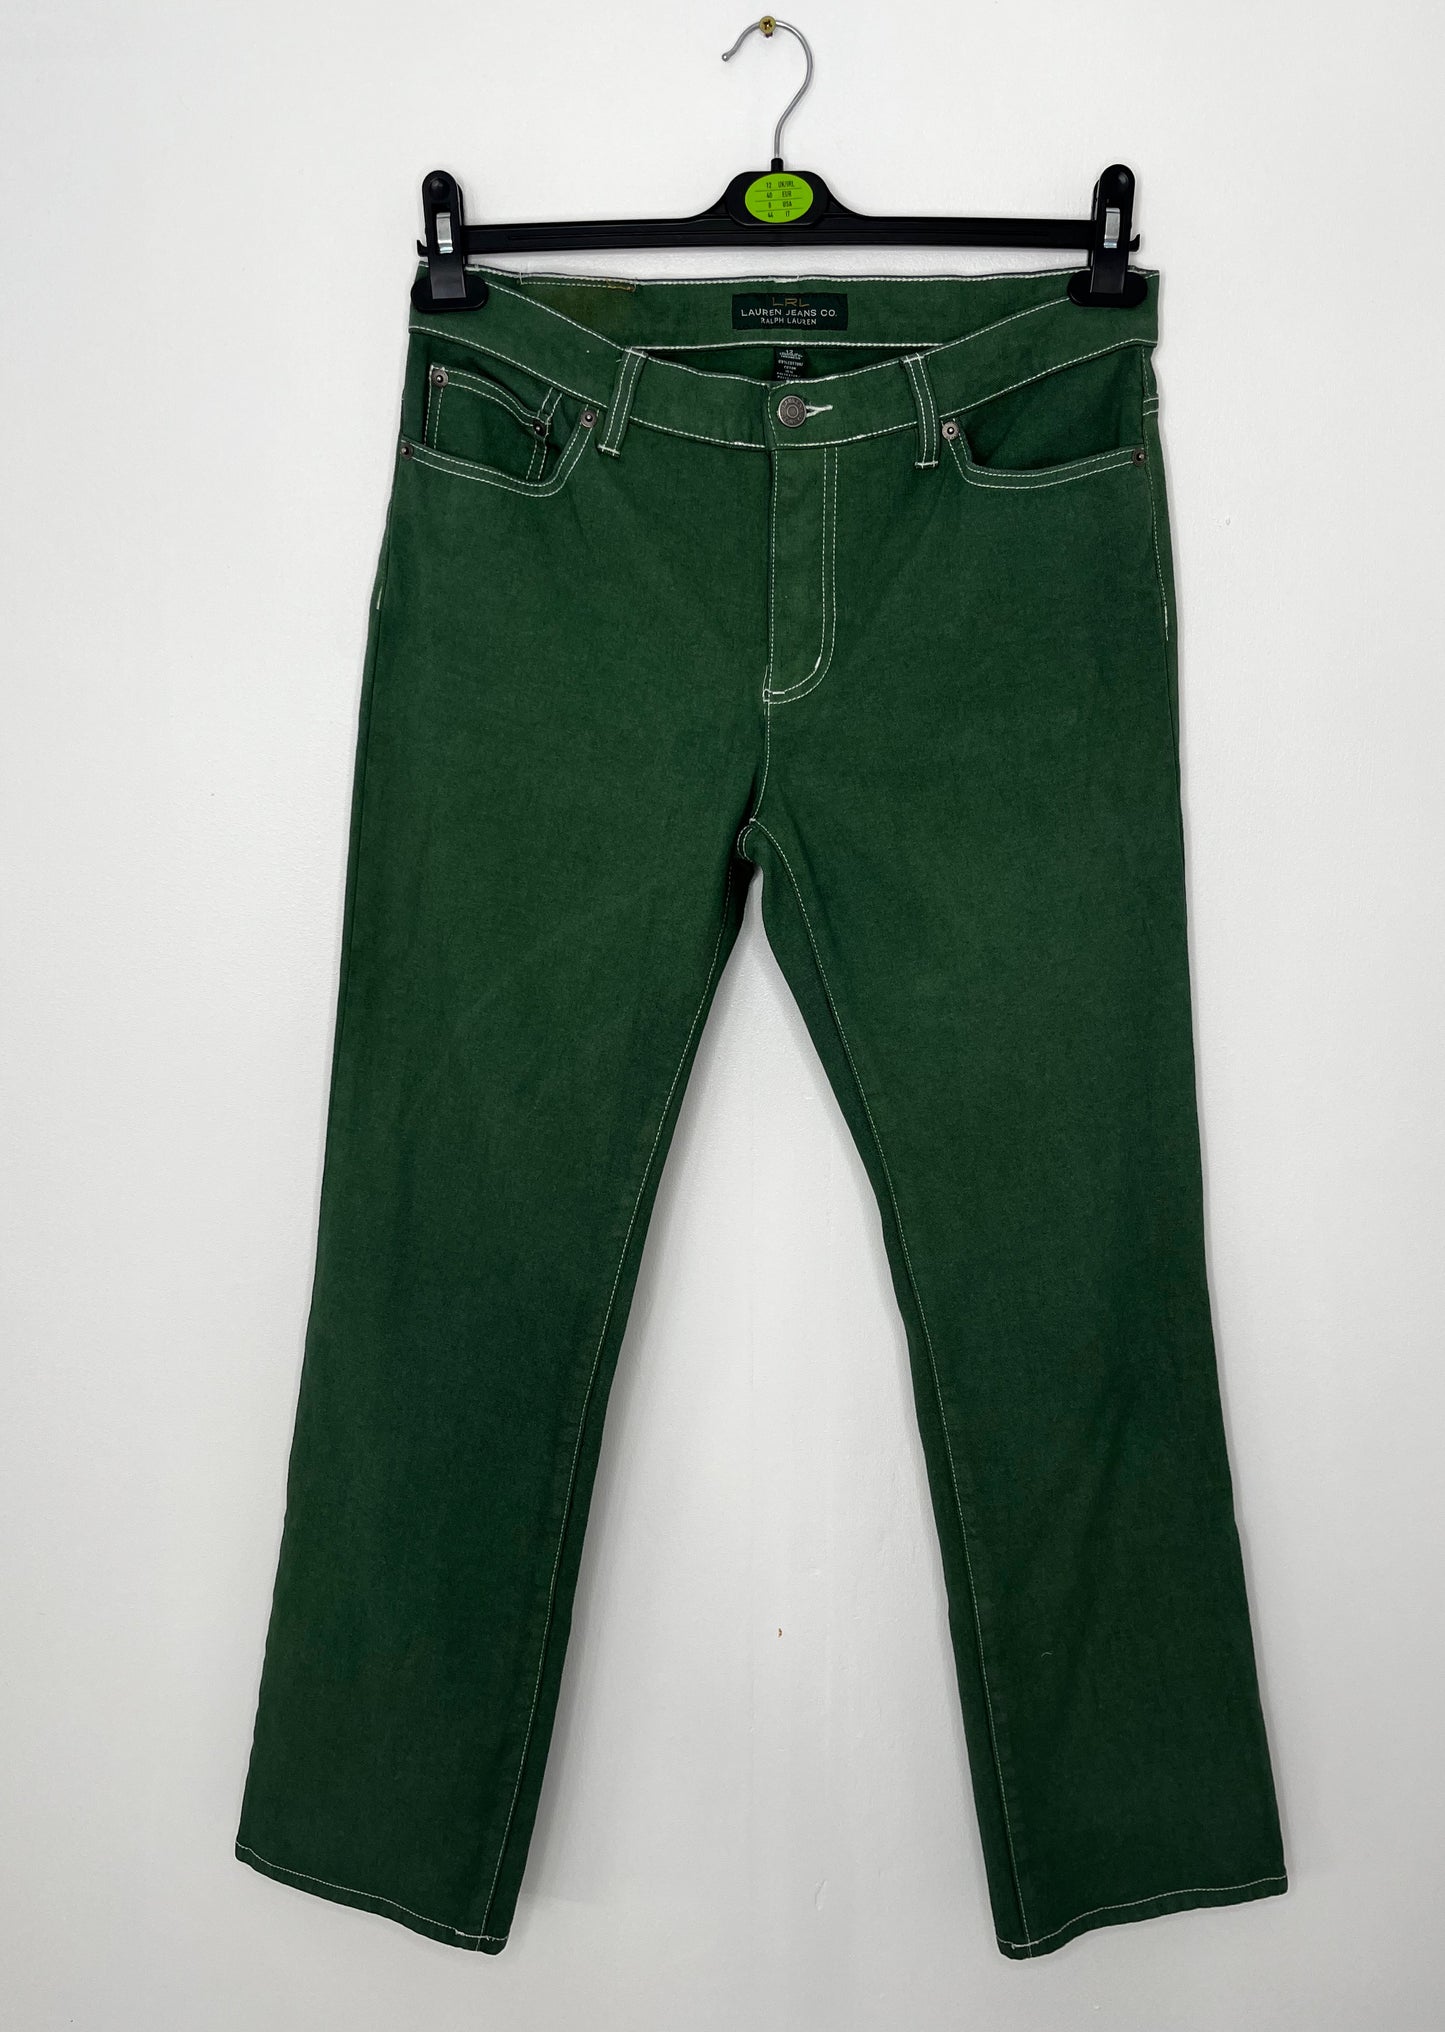 Ralph Lauren Green Jeans